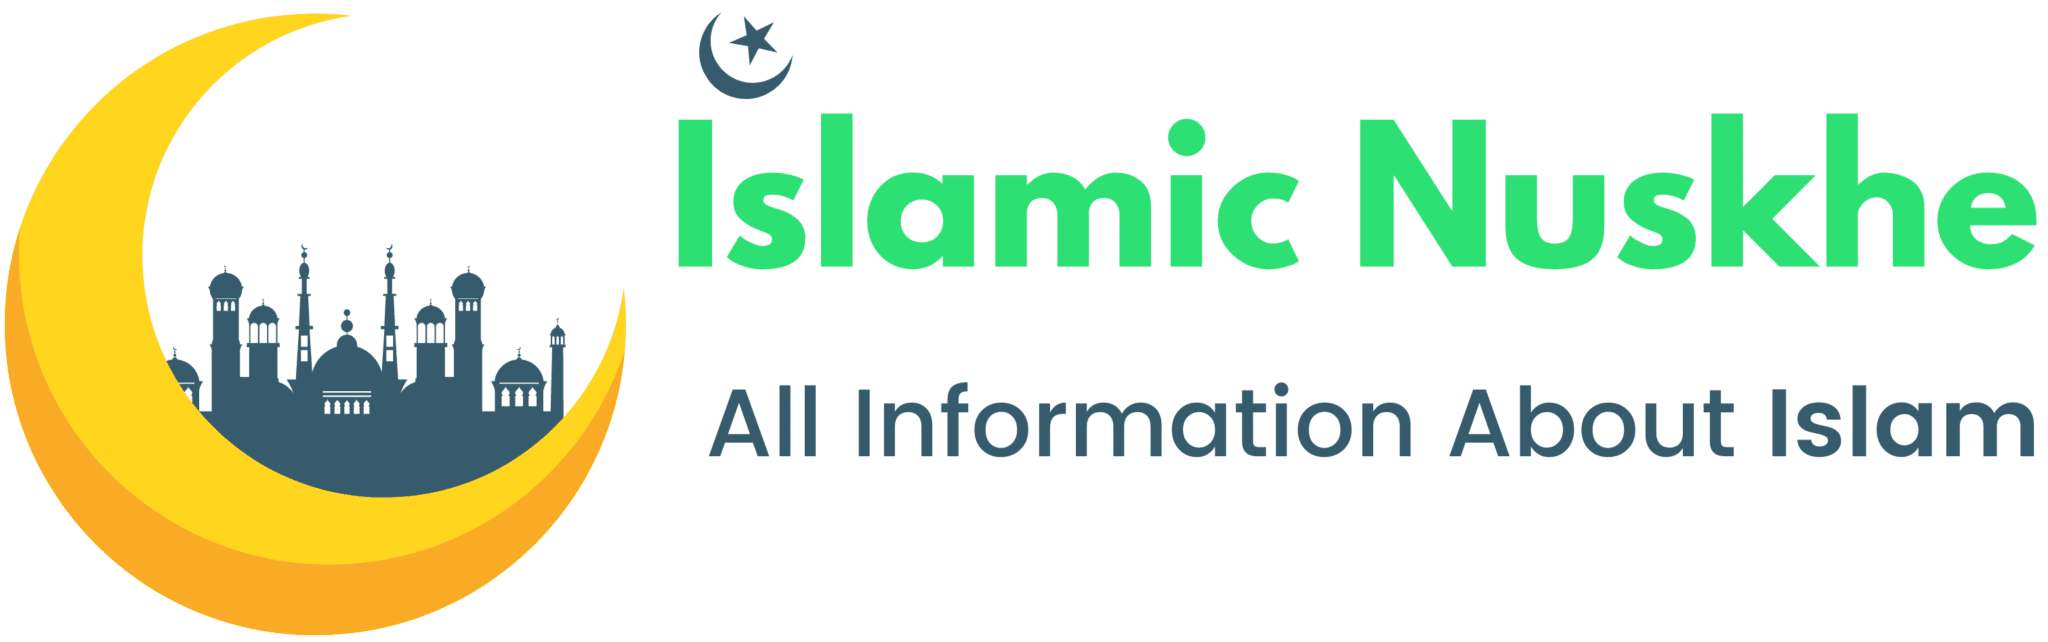 Islamic Nuskhe All Information about Islam